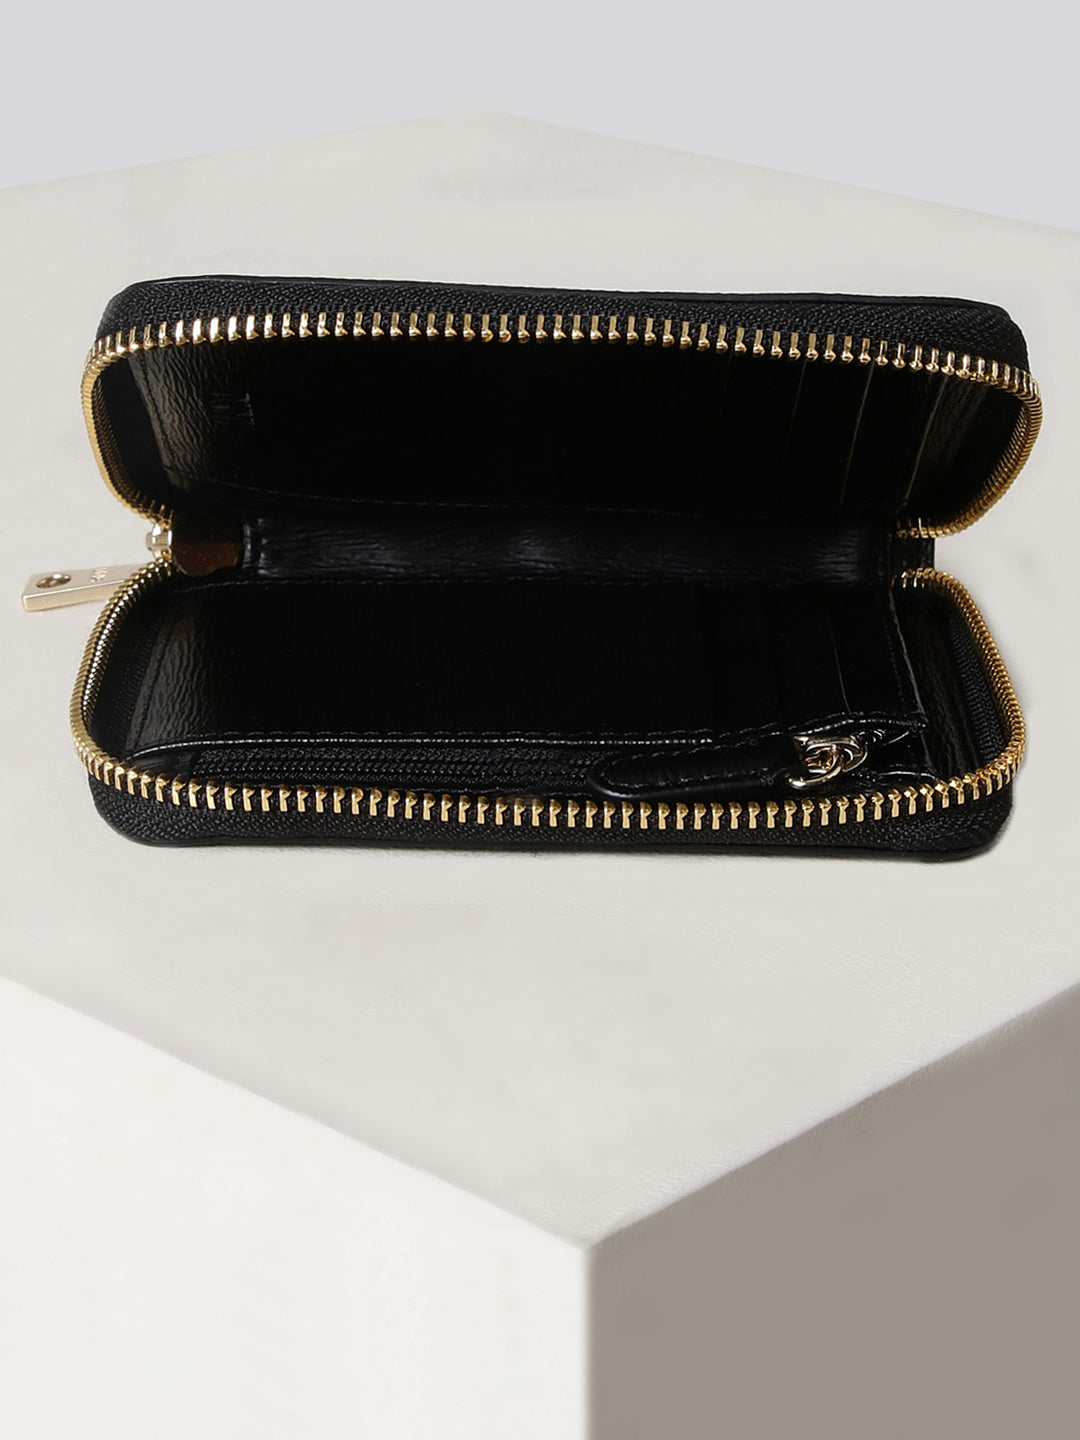 Donna Karan New York DKNY Womens Brown Suede Leather Shoulder Bah Purse  Size OS | eBay